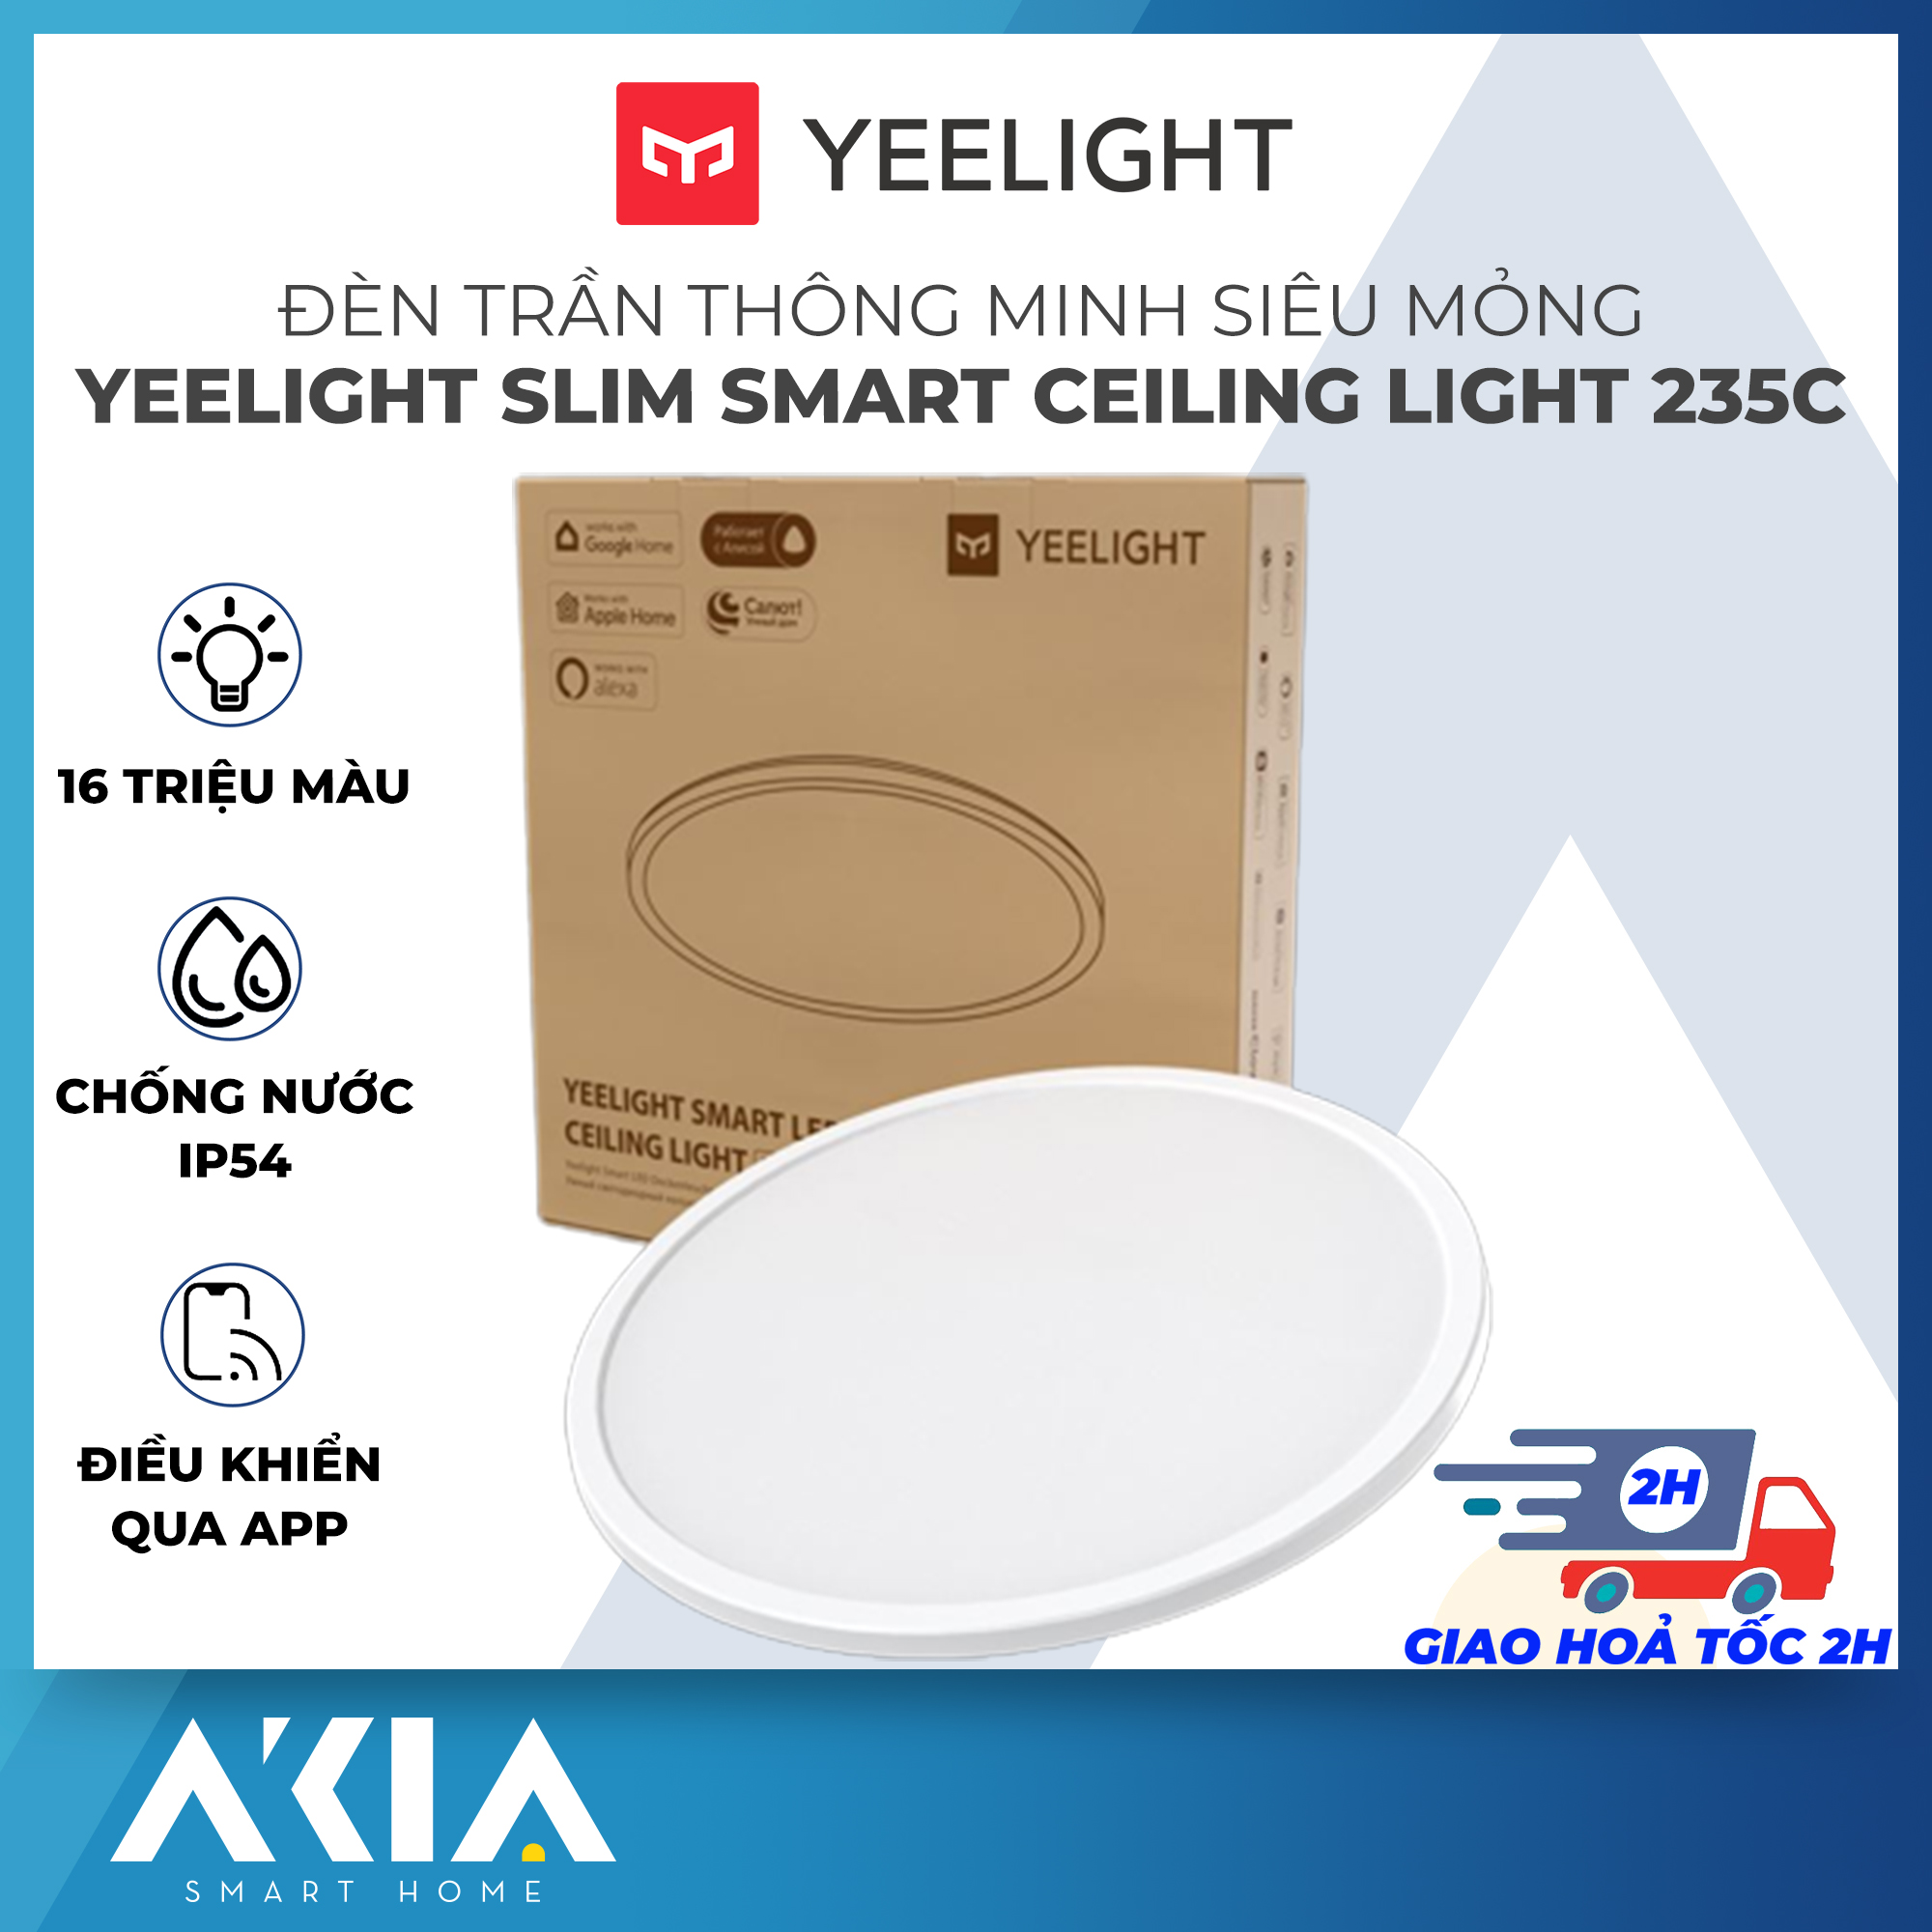 Yeelight Ultra Slim Smart Ceiling Light 235C 300C 400C